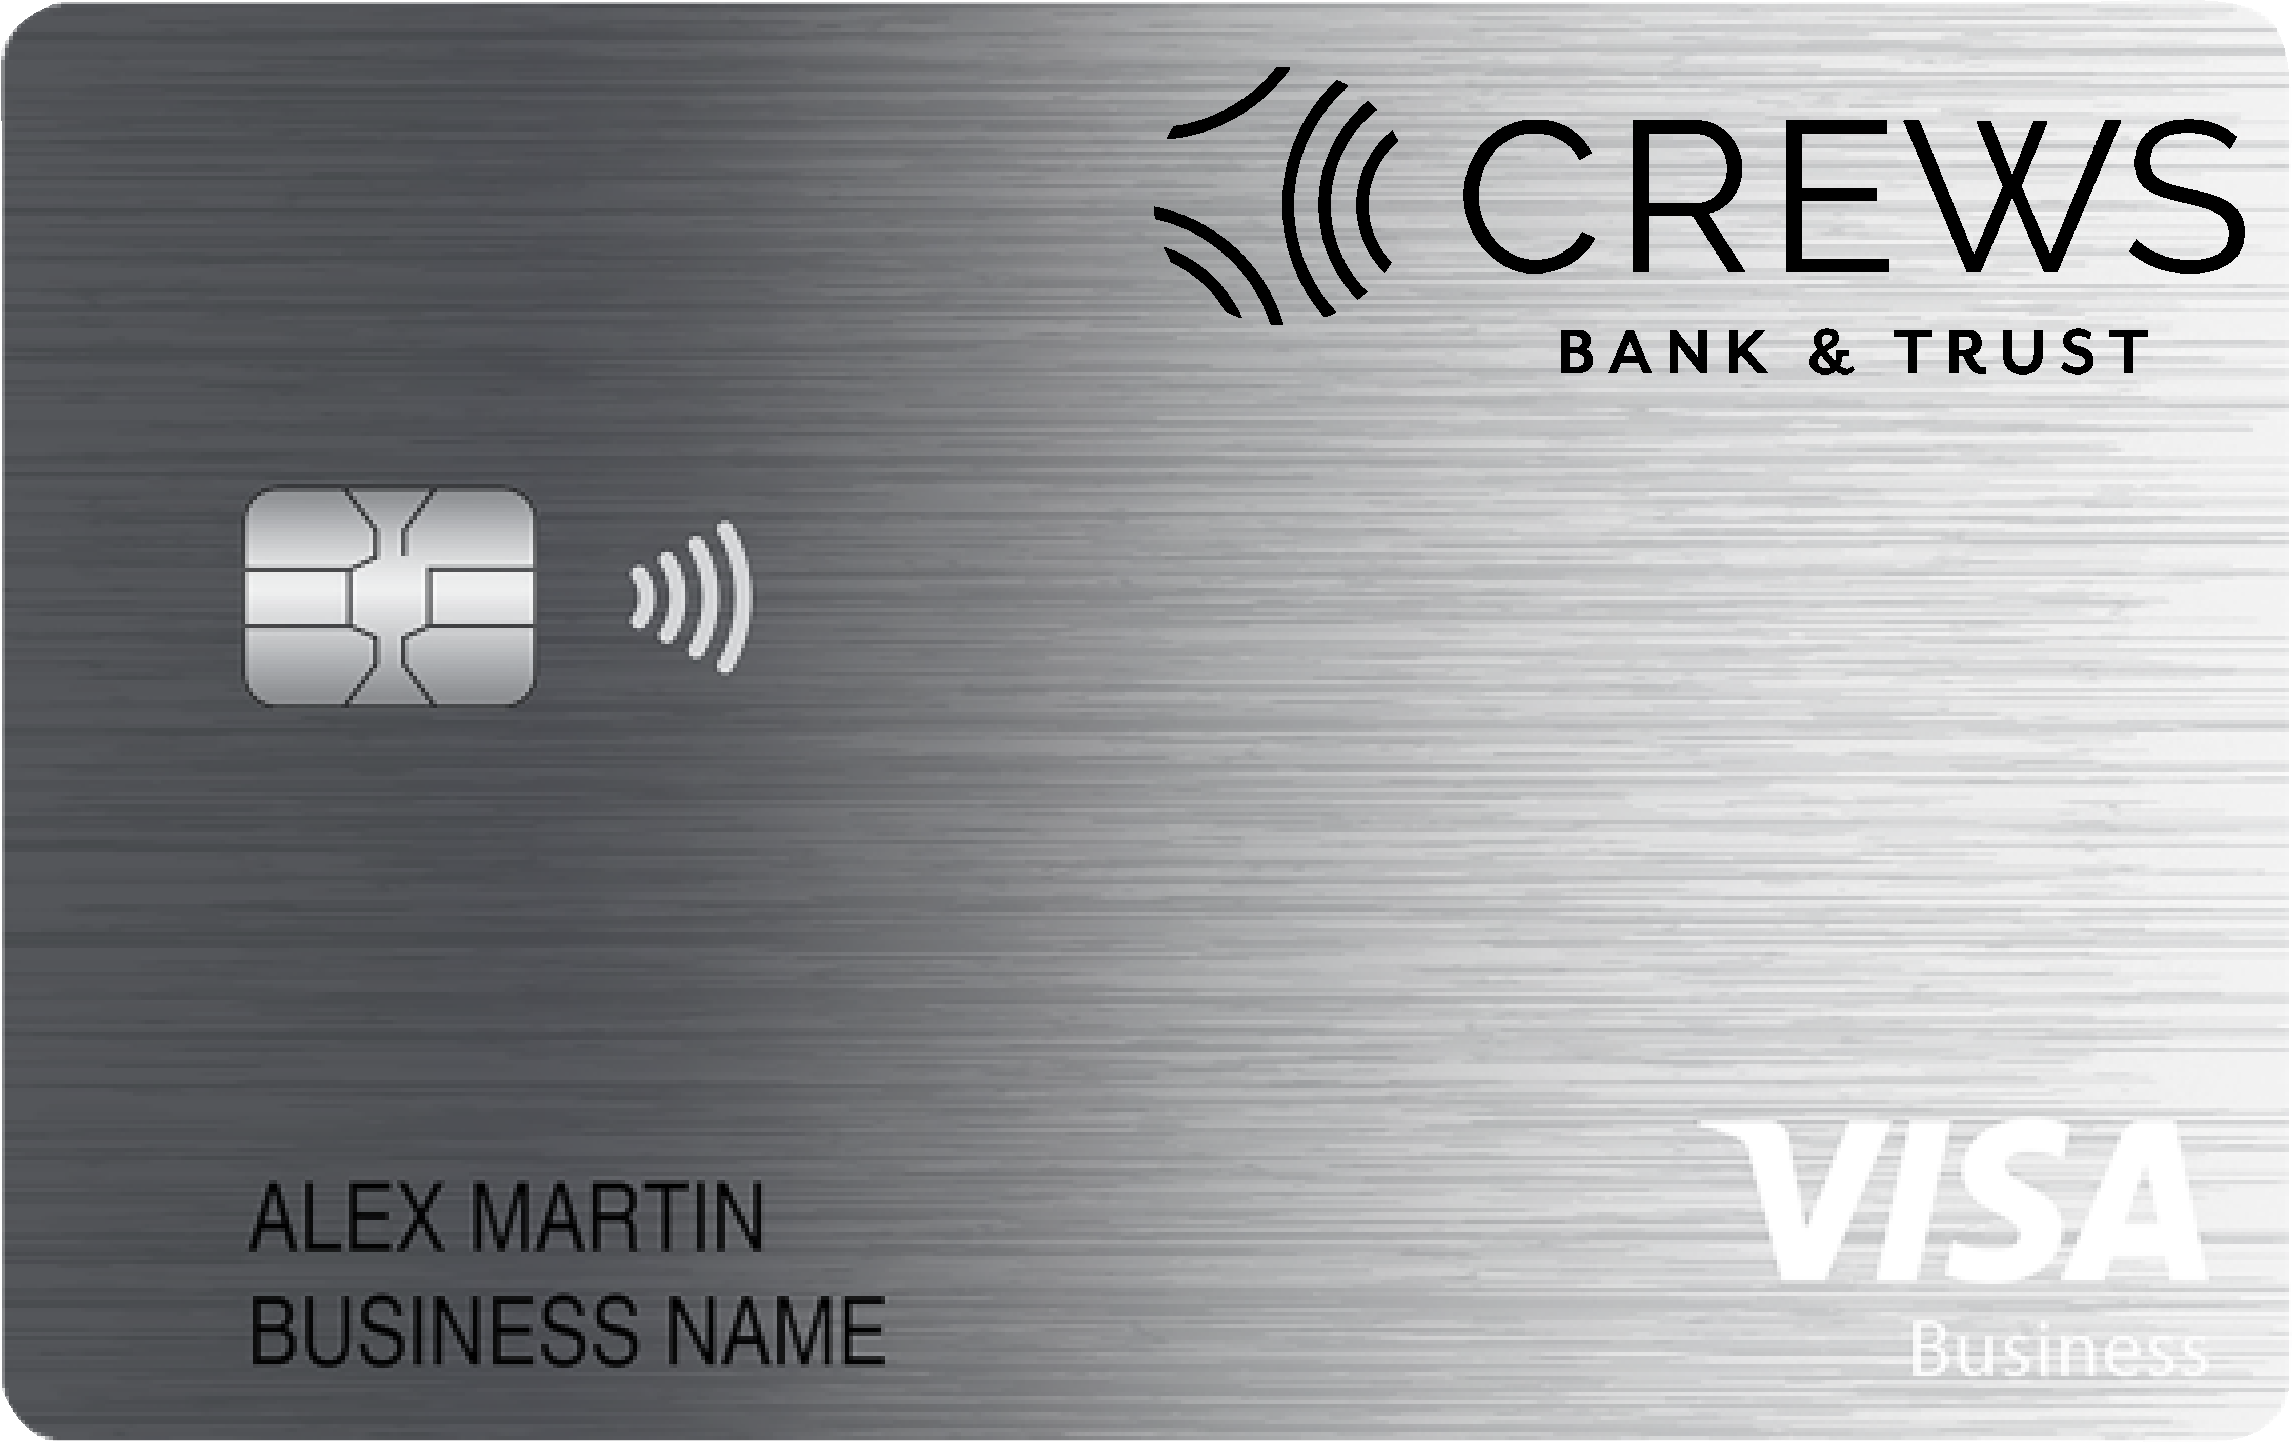 Crews Bank & Trust Business Card Card